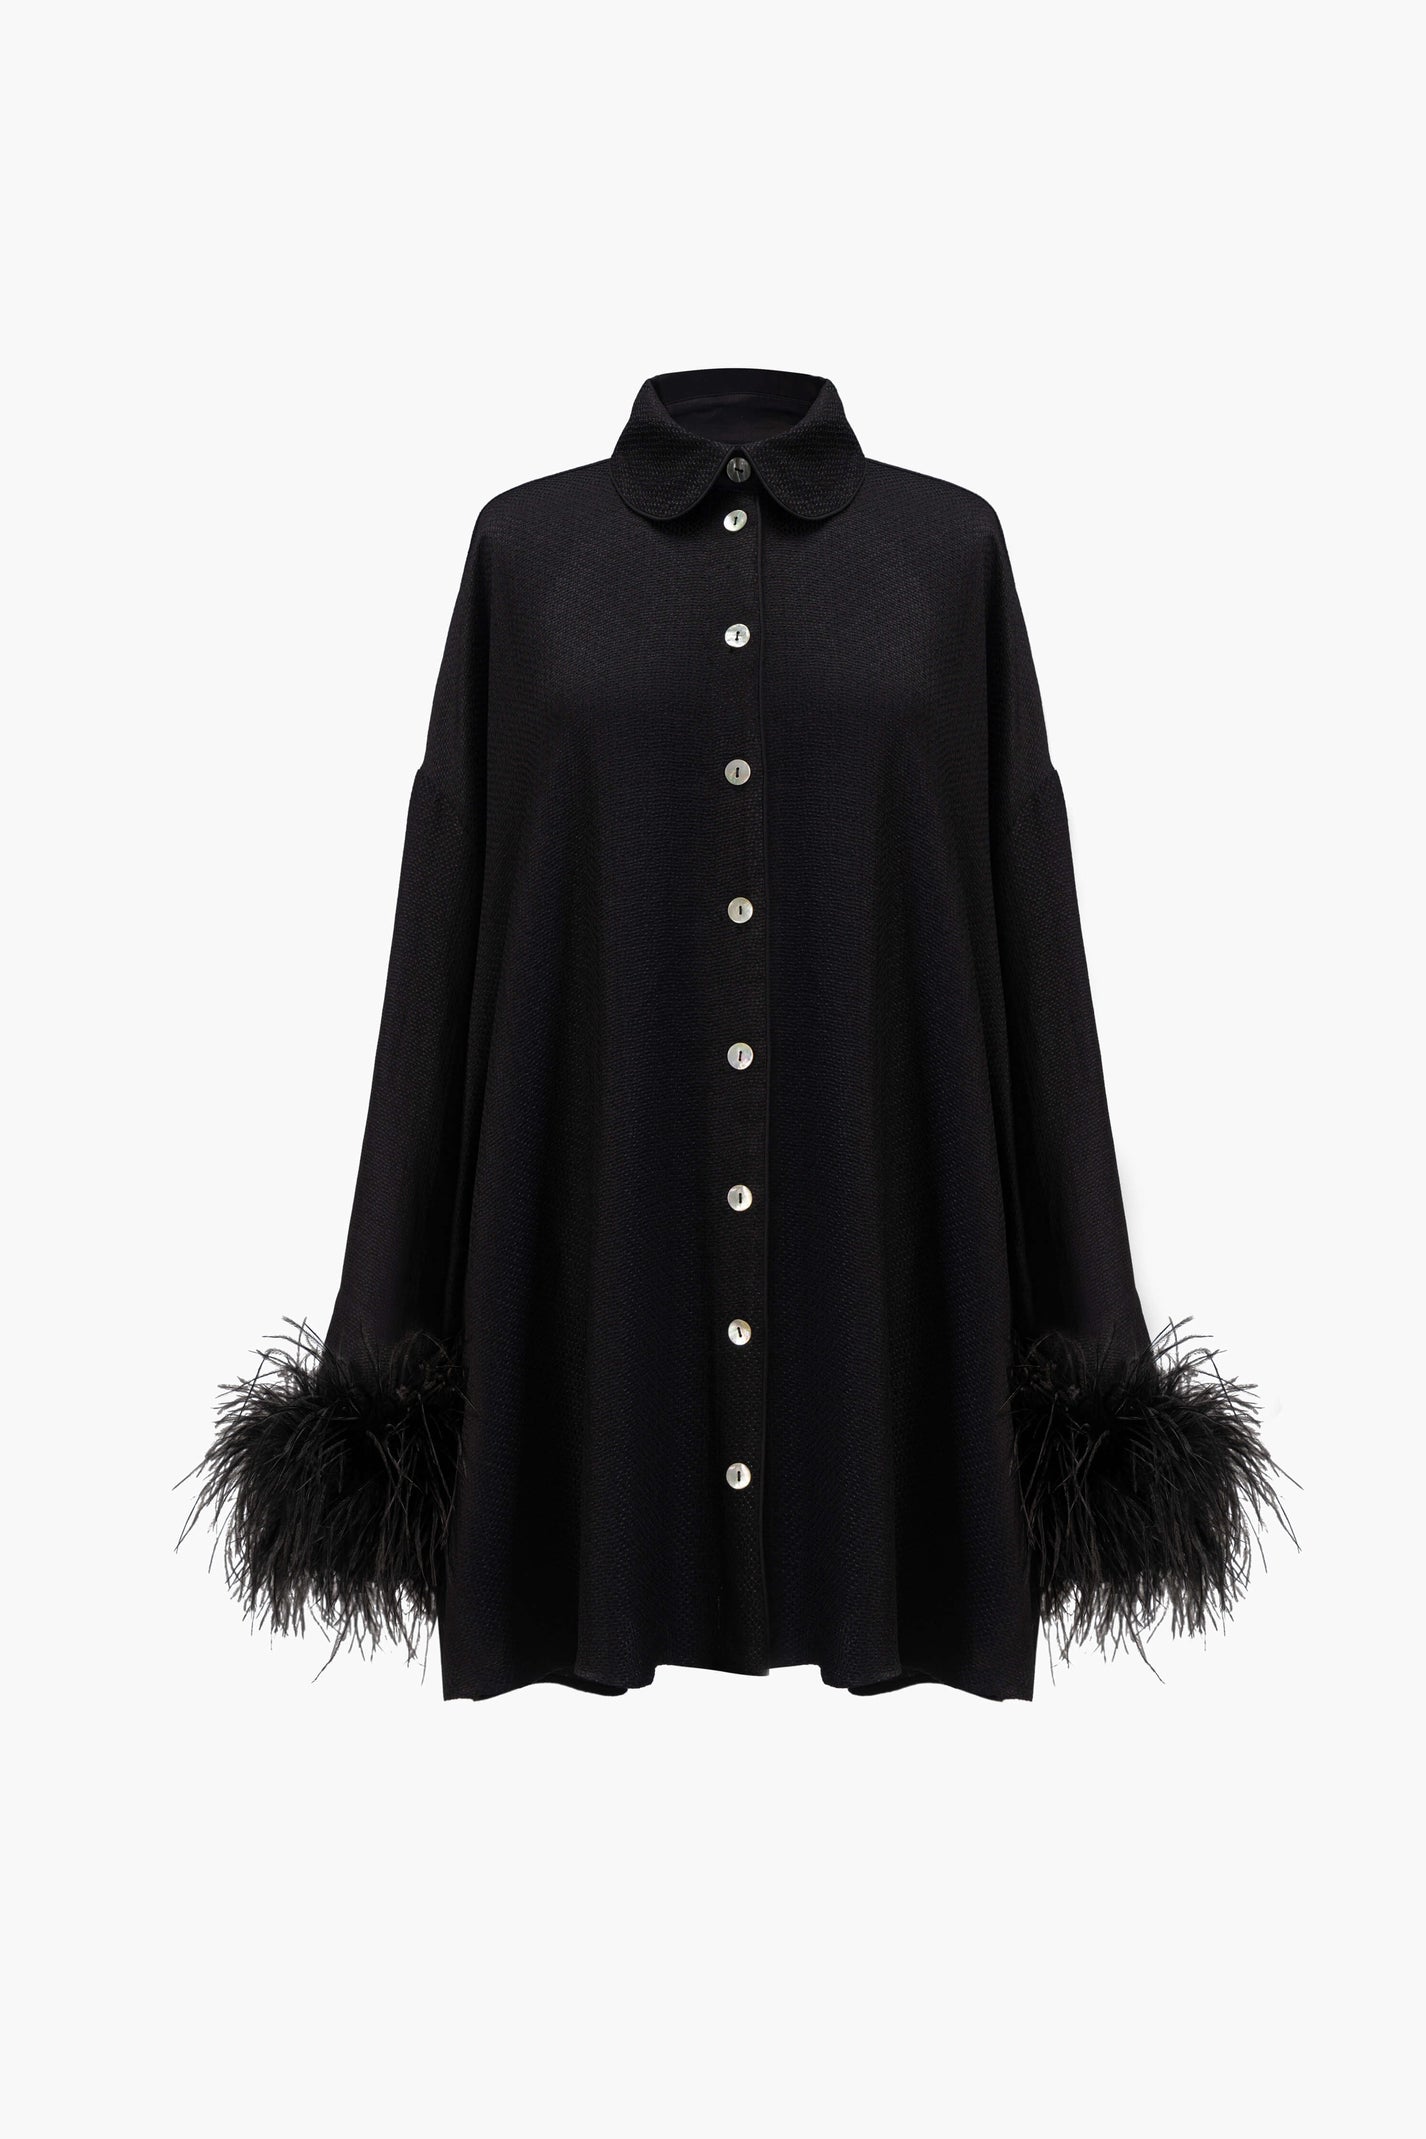 Daily Sleeper Black Pastelle Oversized Jacquard Shirt Dress